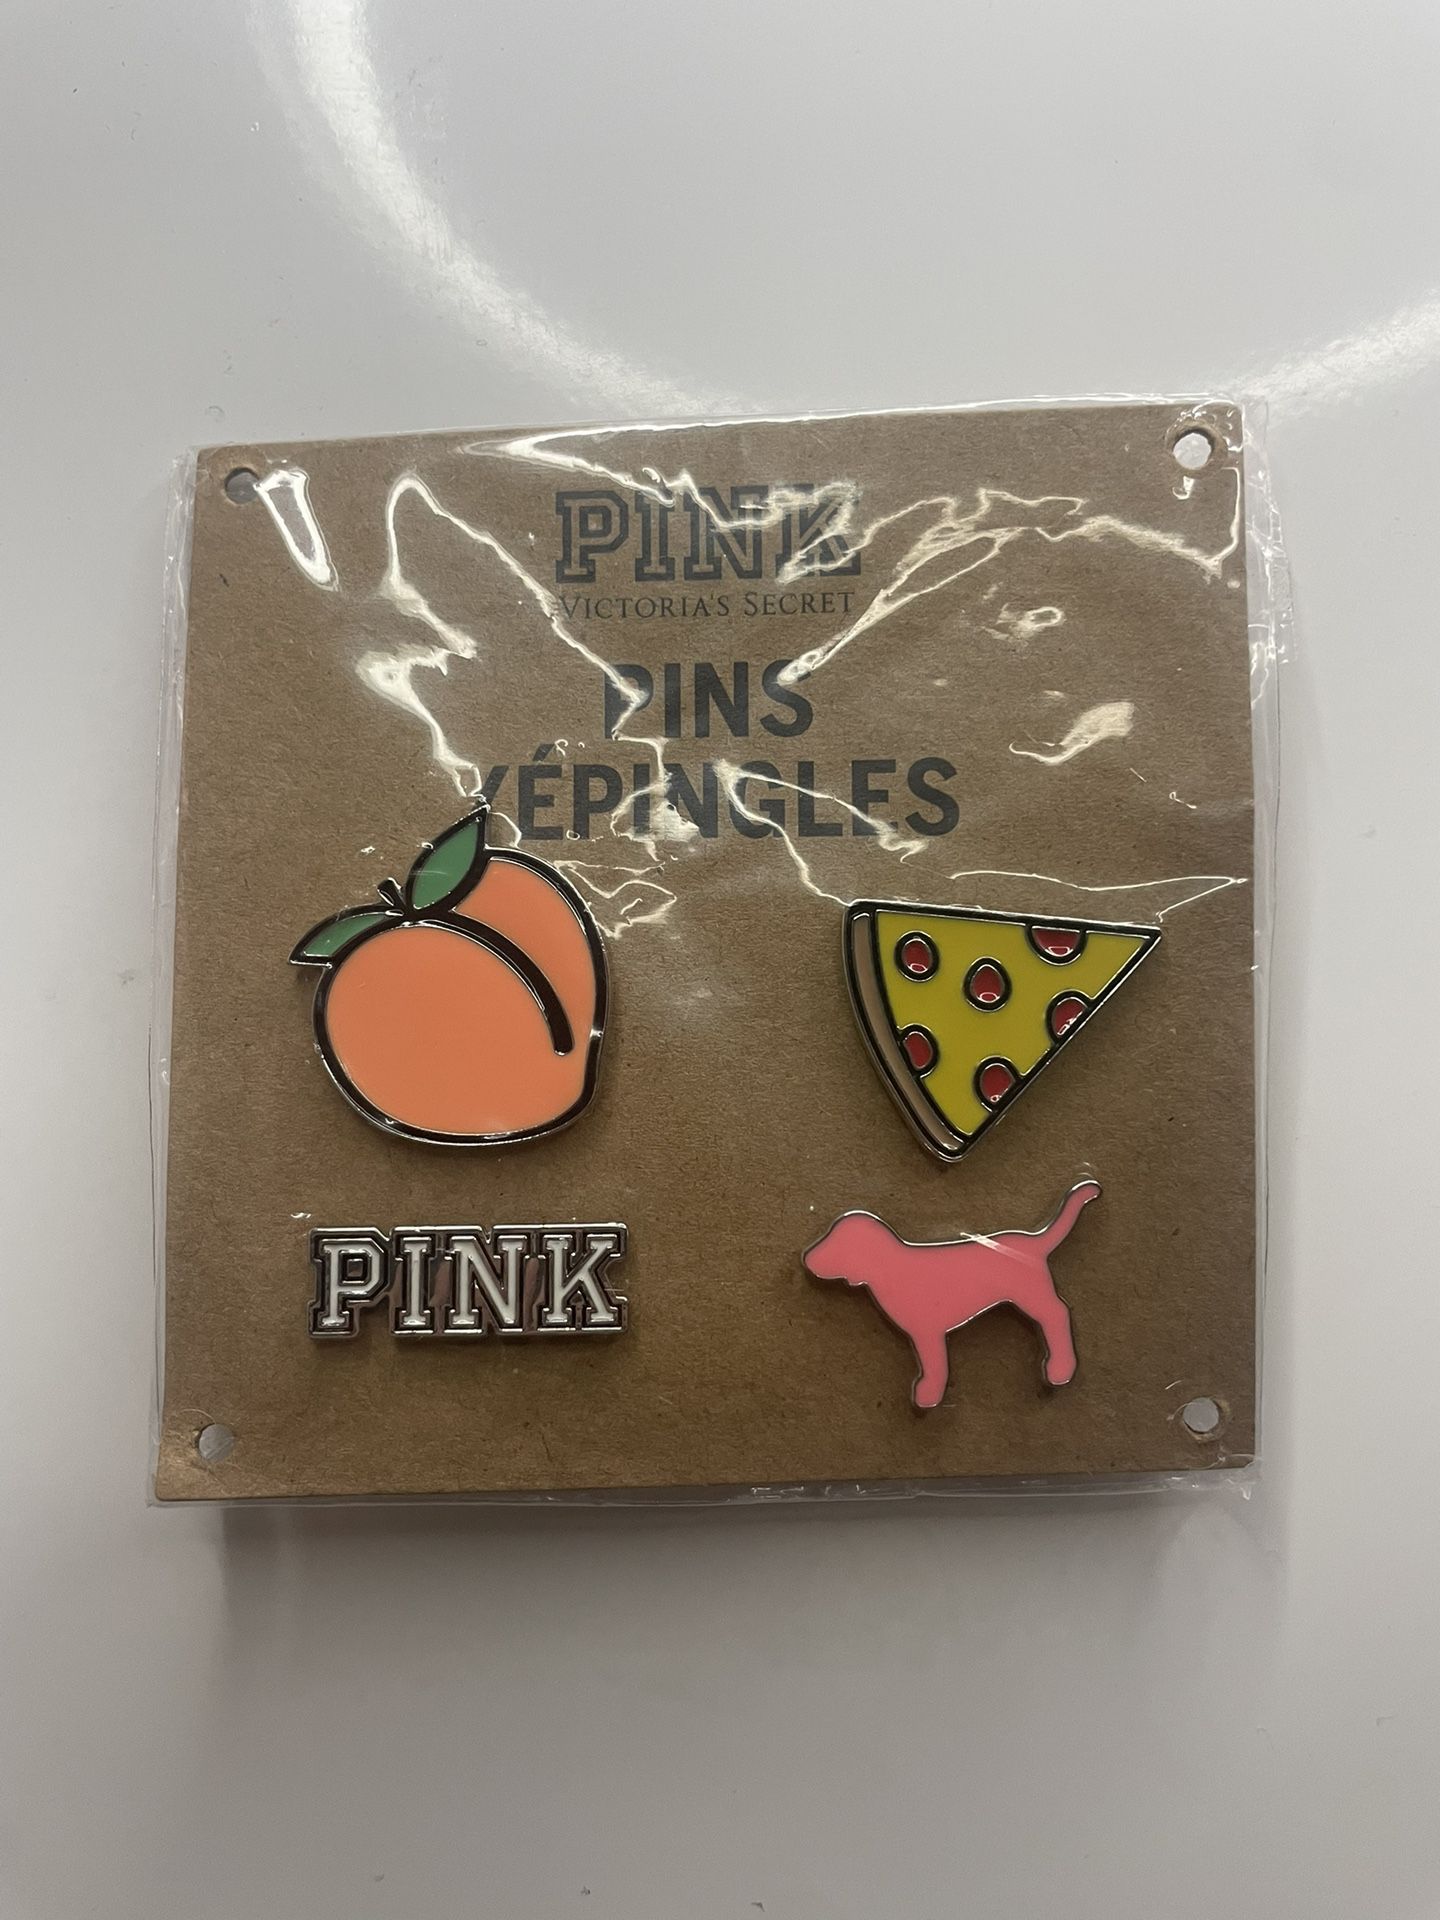 Victoria’s secret PINK pins (4)